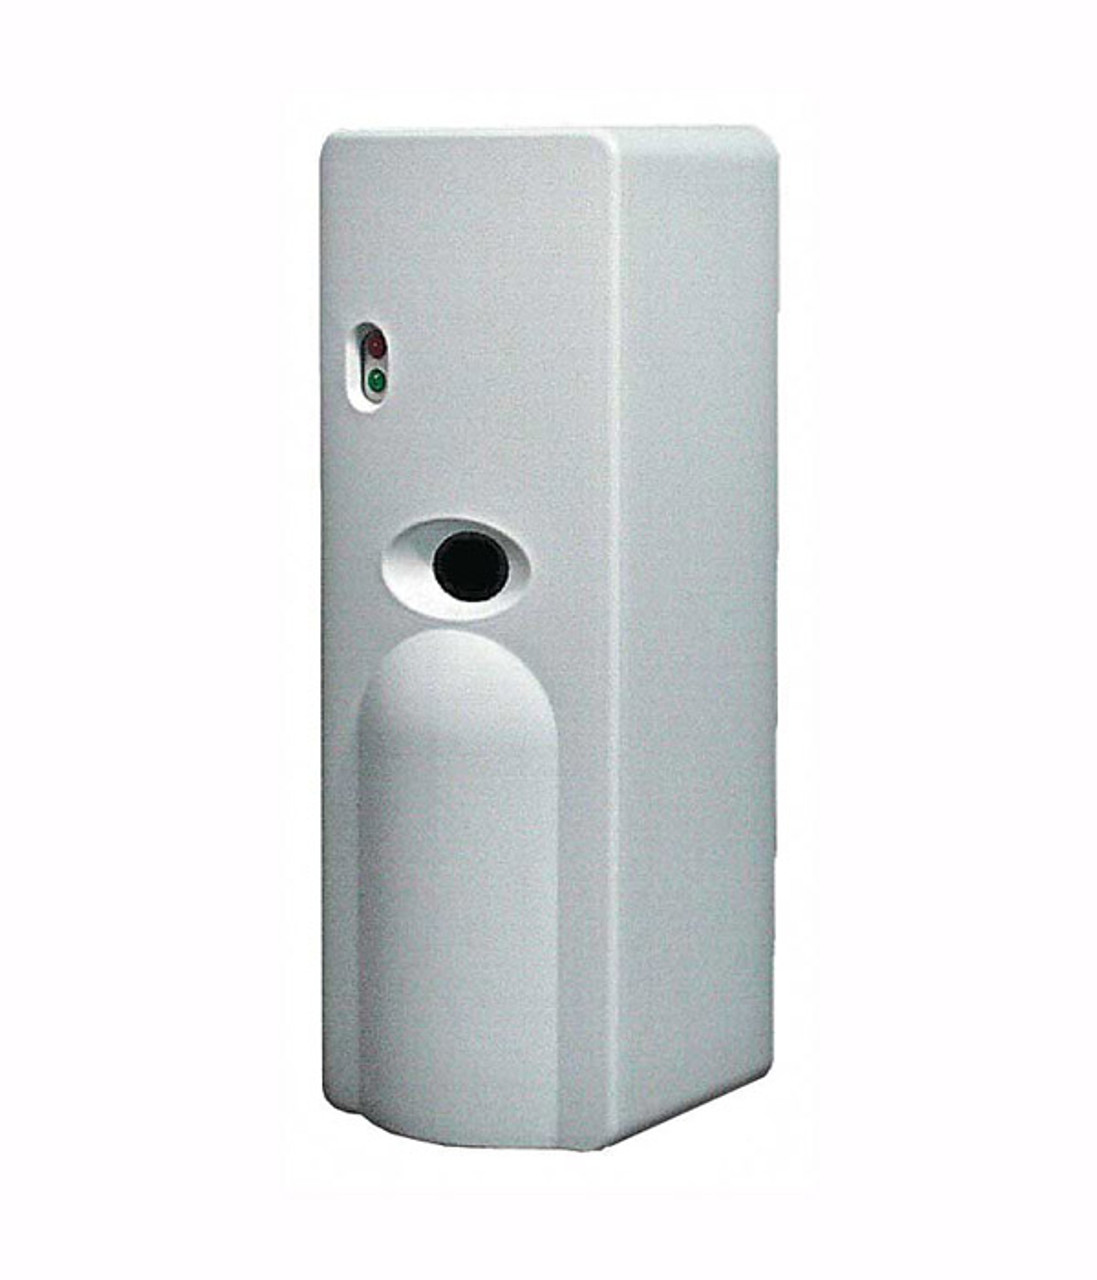 automatic air freshener